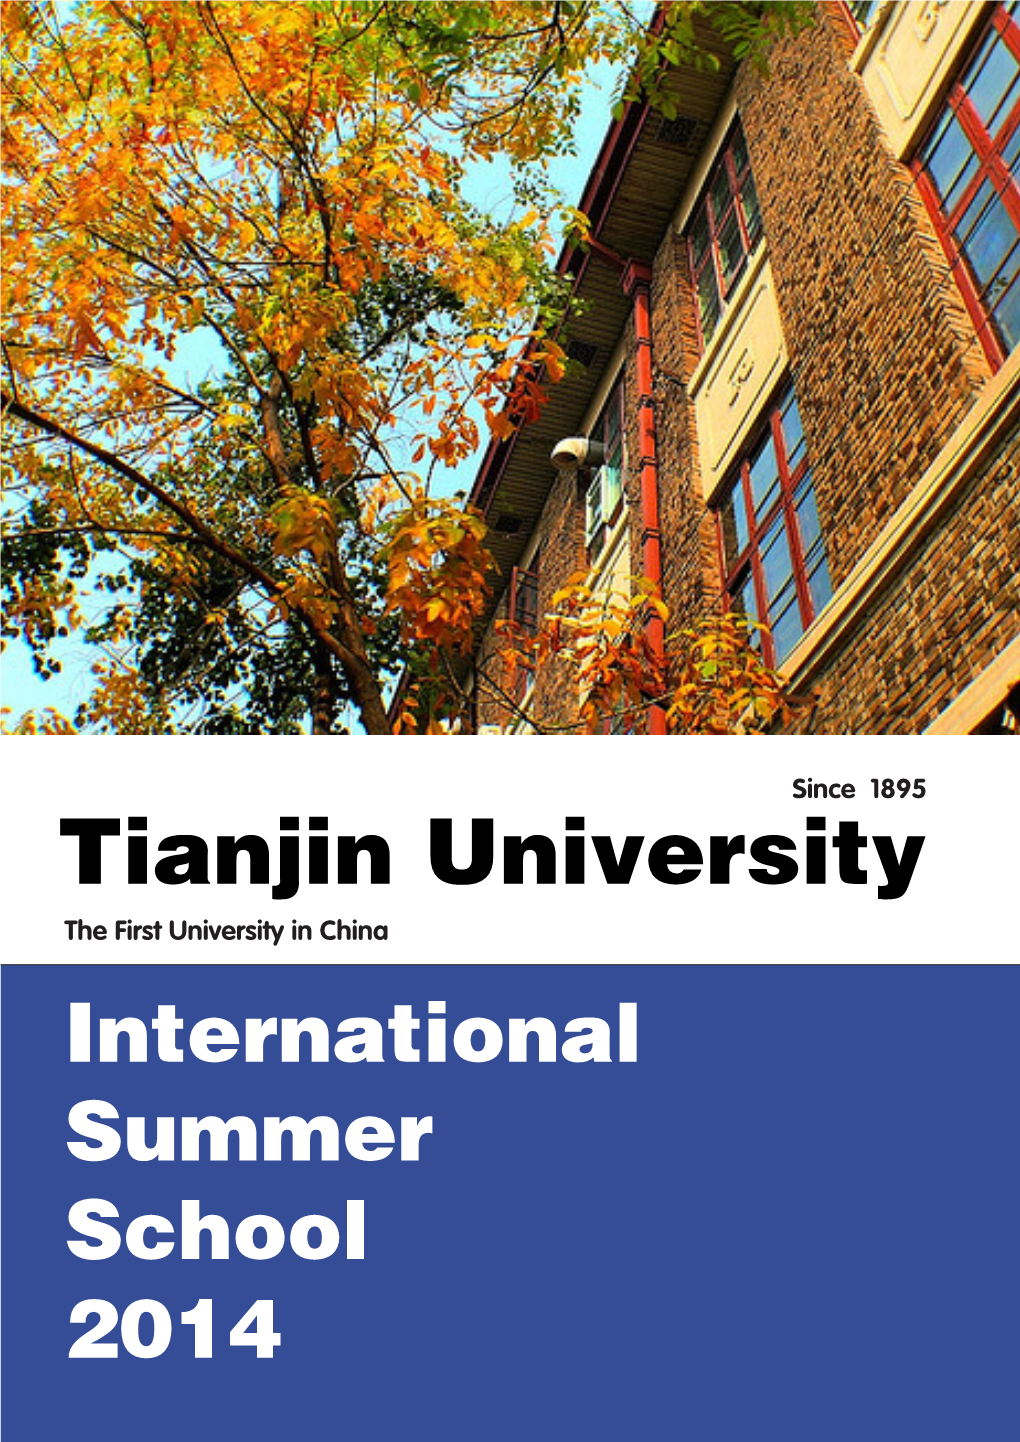 Tianjin University the First University in China International Summer School 2014 the 2014 TU International Summer School Is Now Open for Application!